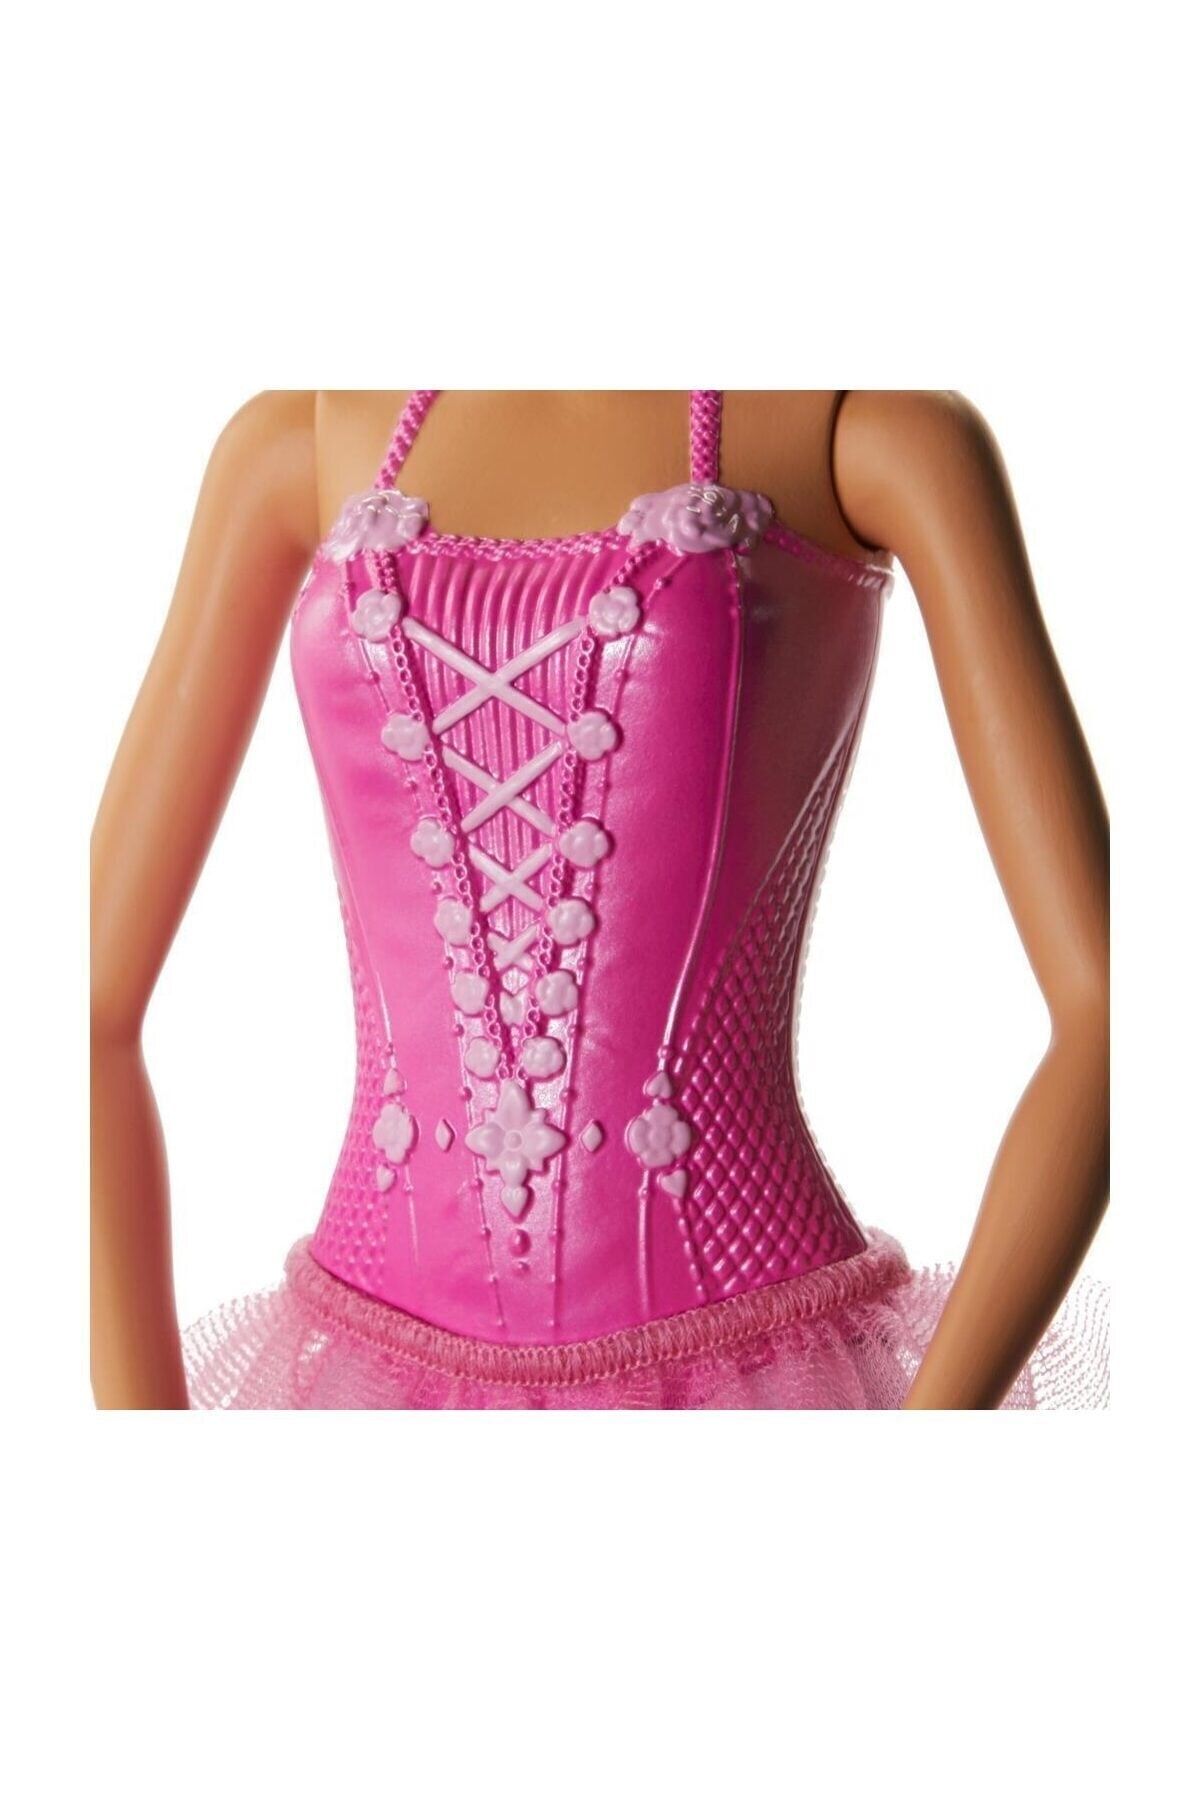 Barbie Barbie Ballerina Dolls in Brunette Lilac Dress - Gjl58-gjl59 -  Trendyol